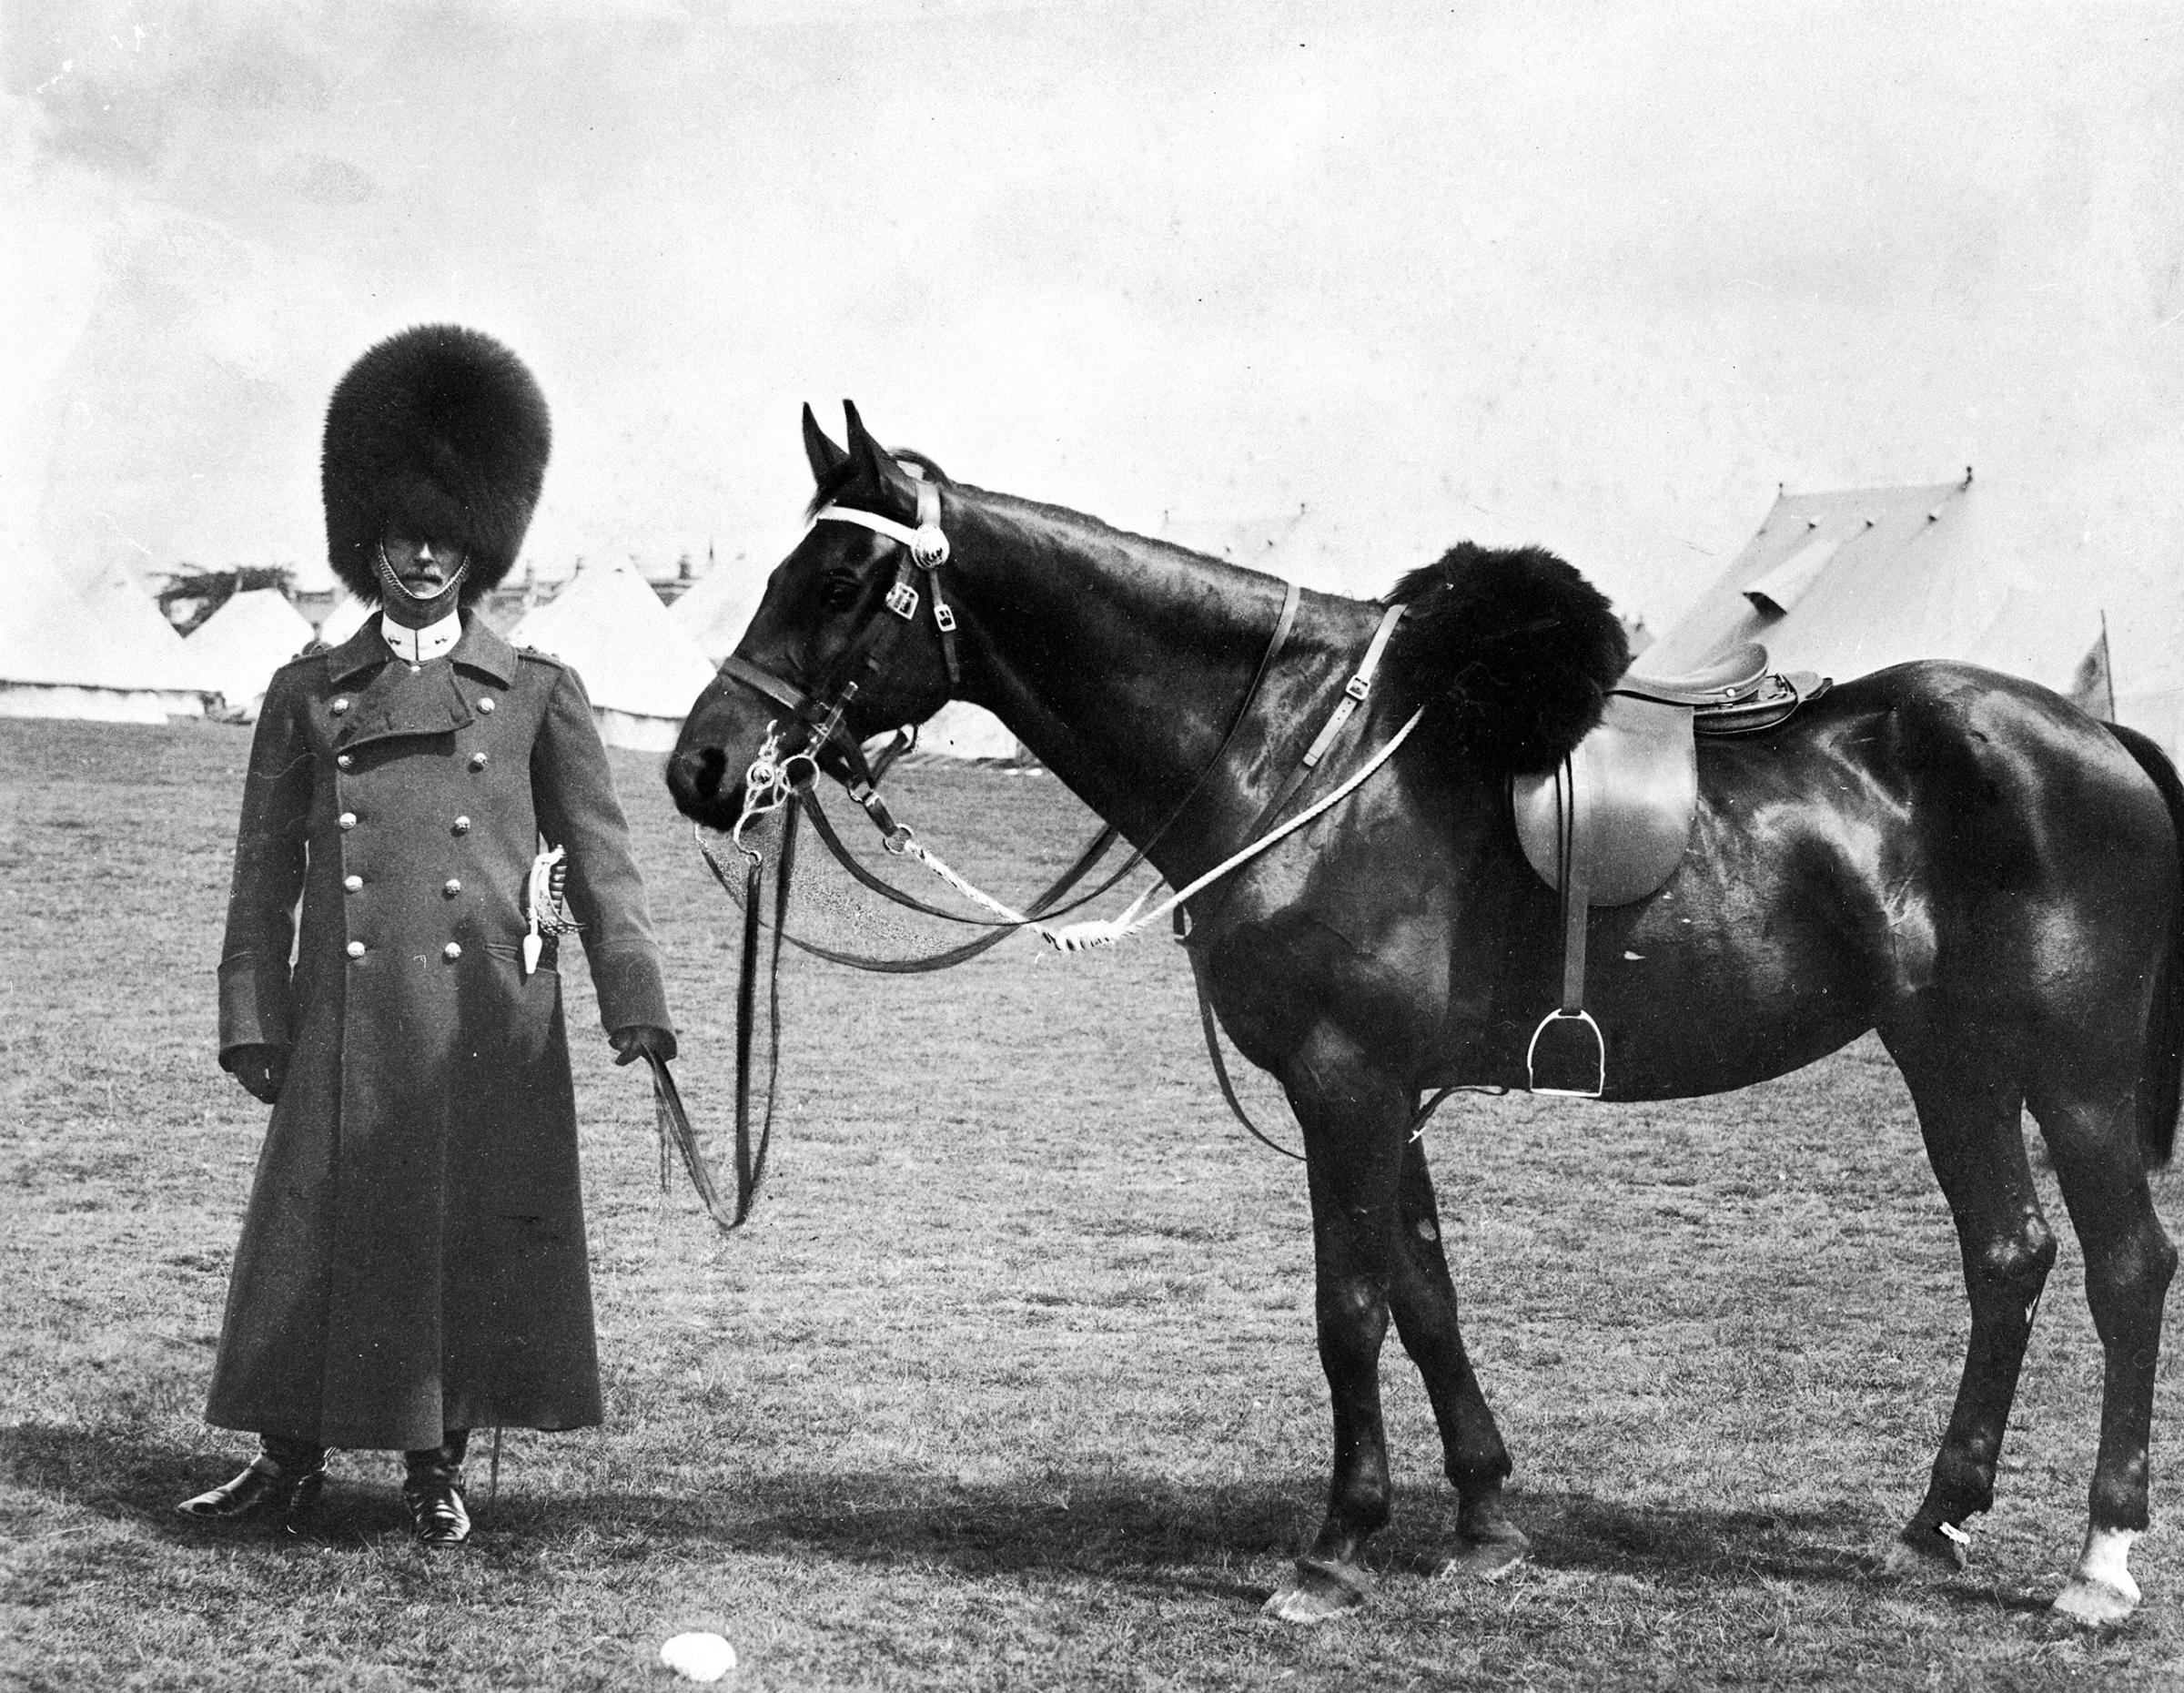 A Grenadier Guard wearing the grenadier's bearskin cap at a military encampment in Dublin. Circa 1910.